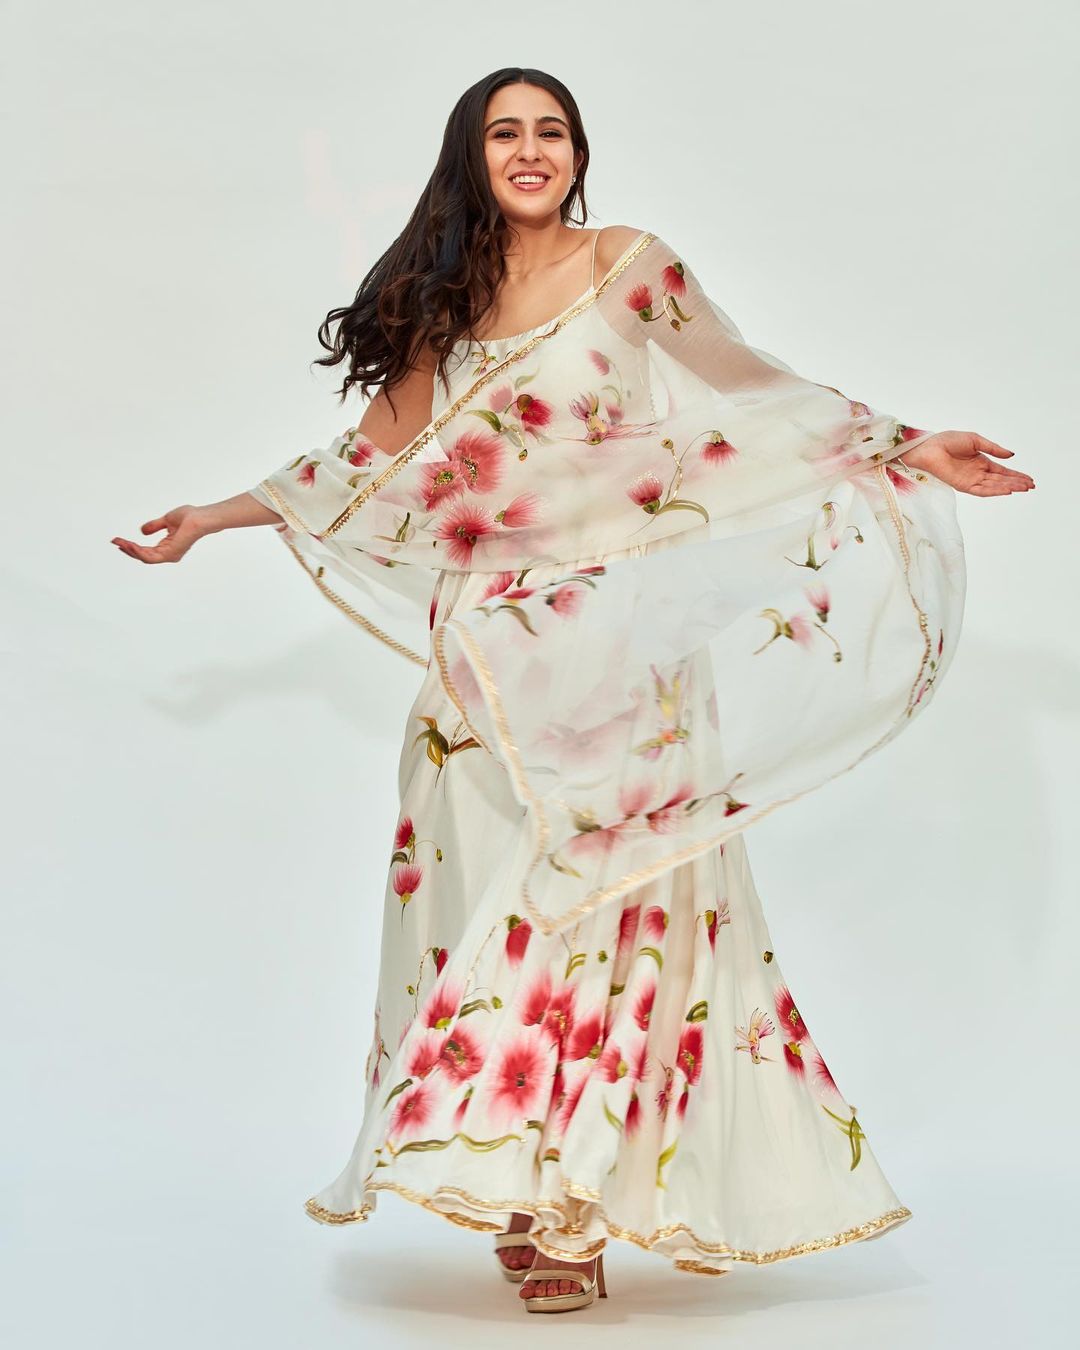 Sara Ali Khan's floral white cotton anarkali is apt to beat the summer heat